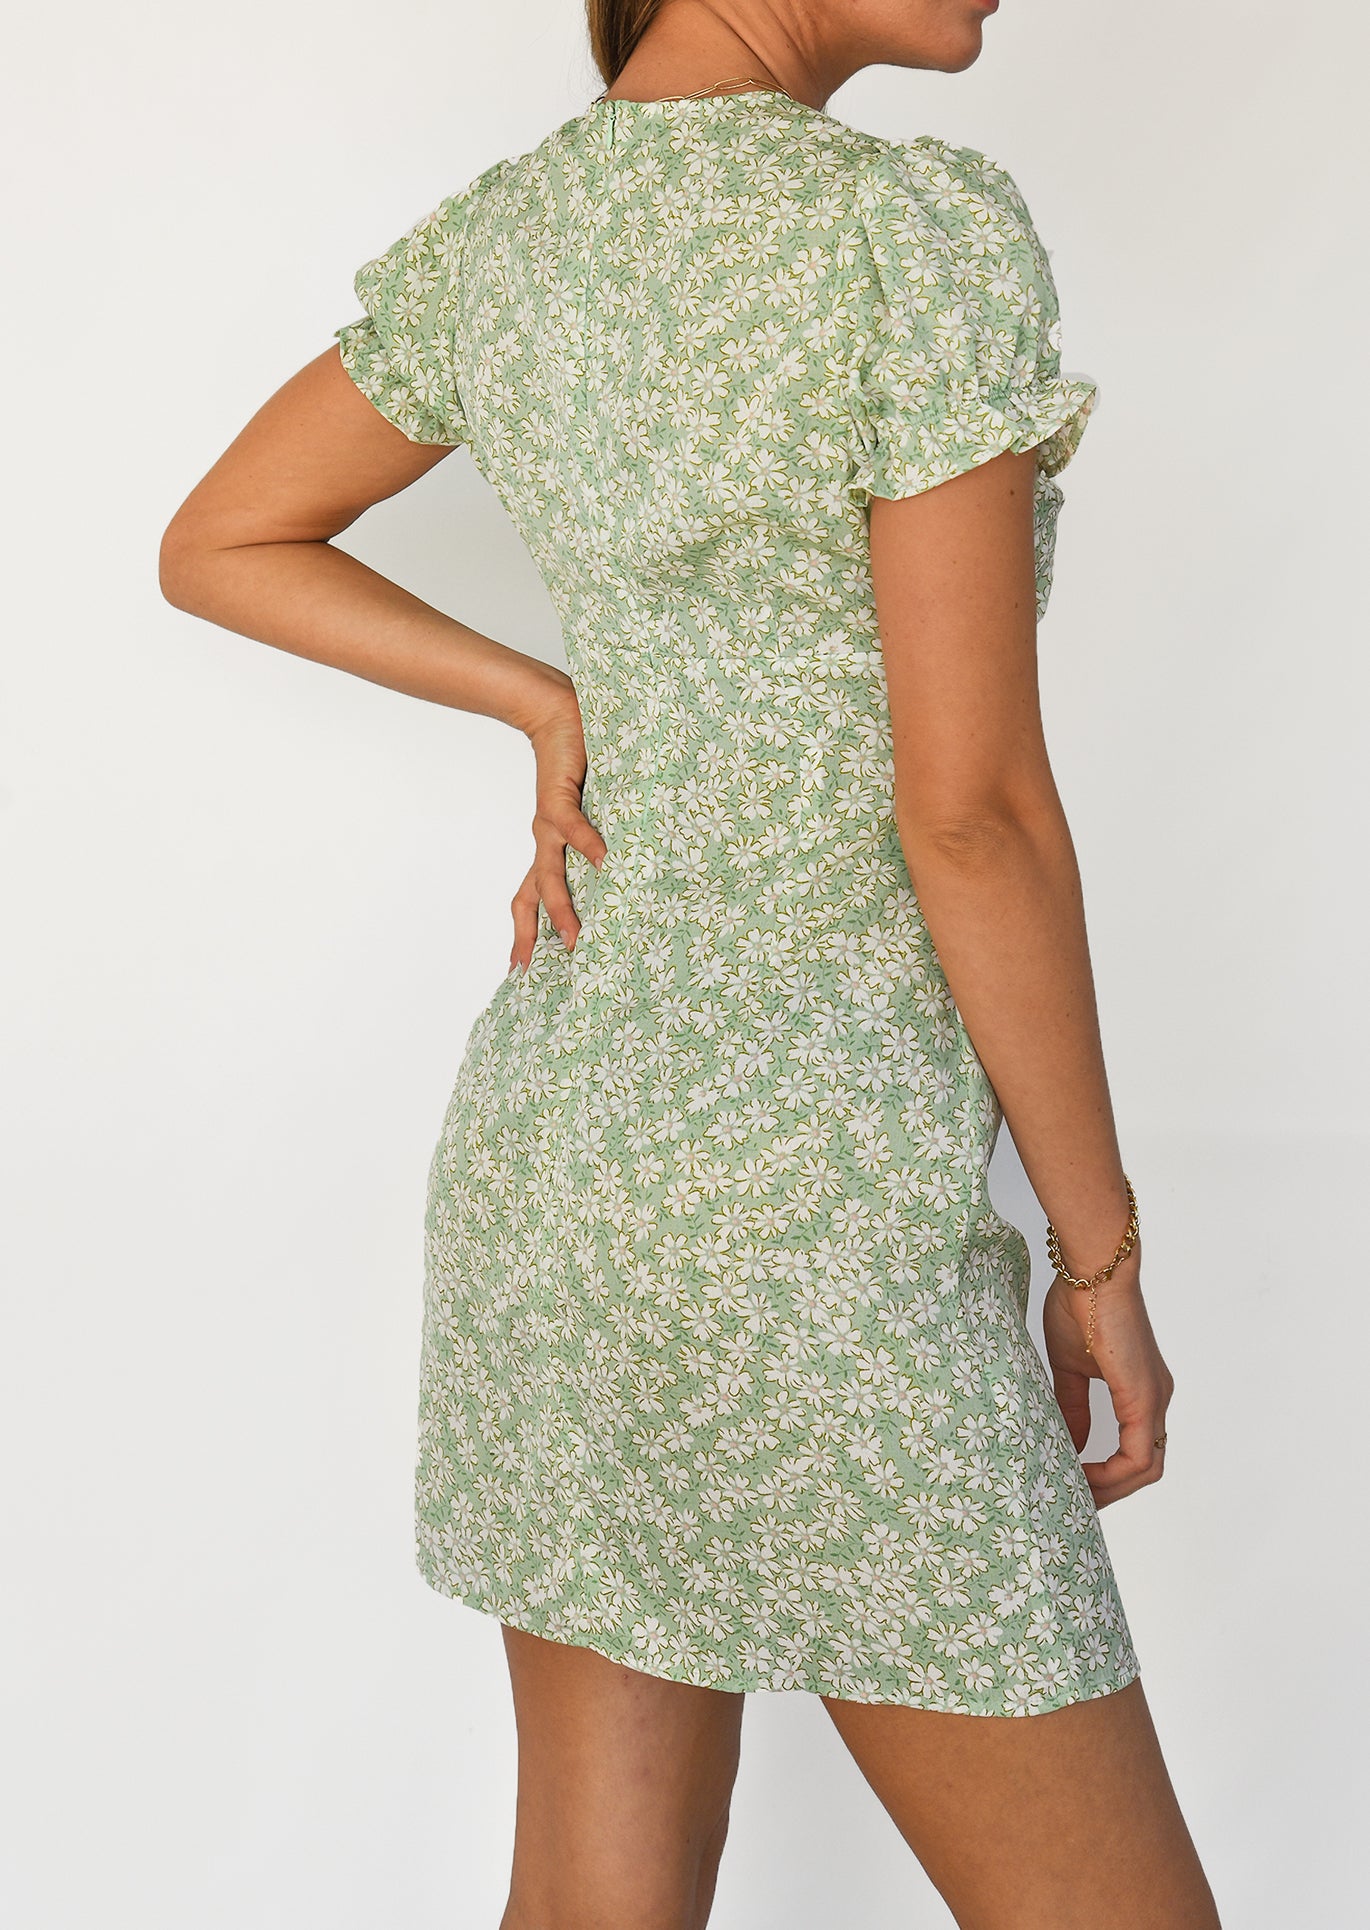 Green floral dress with slit side